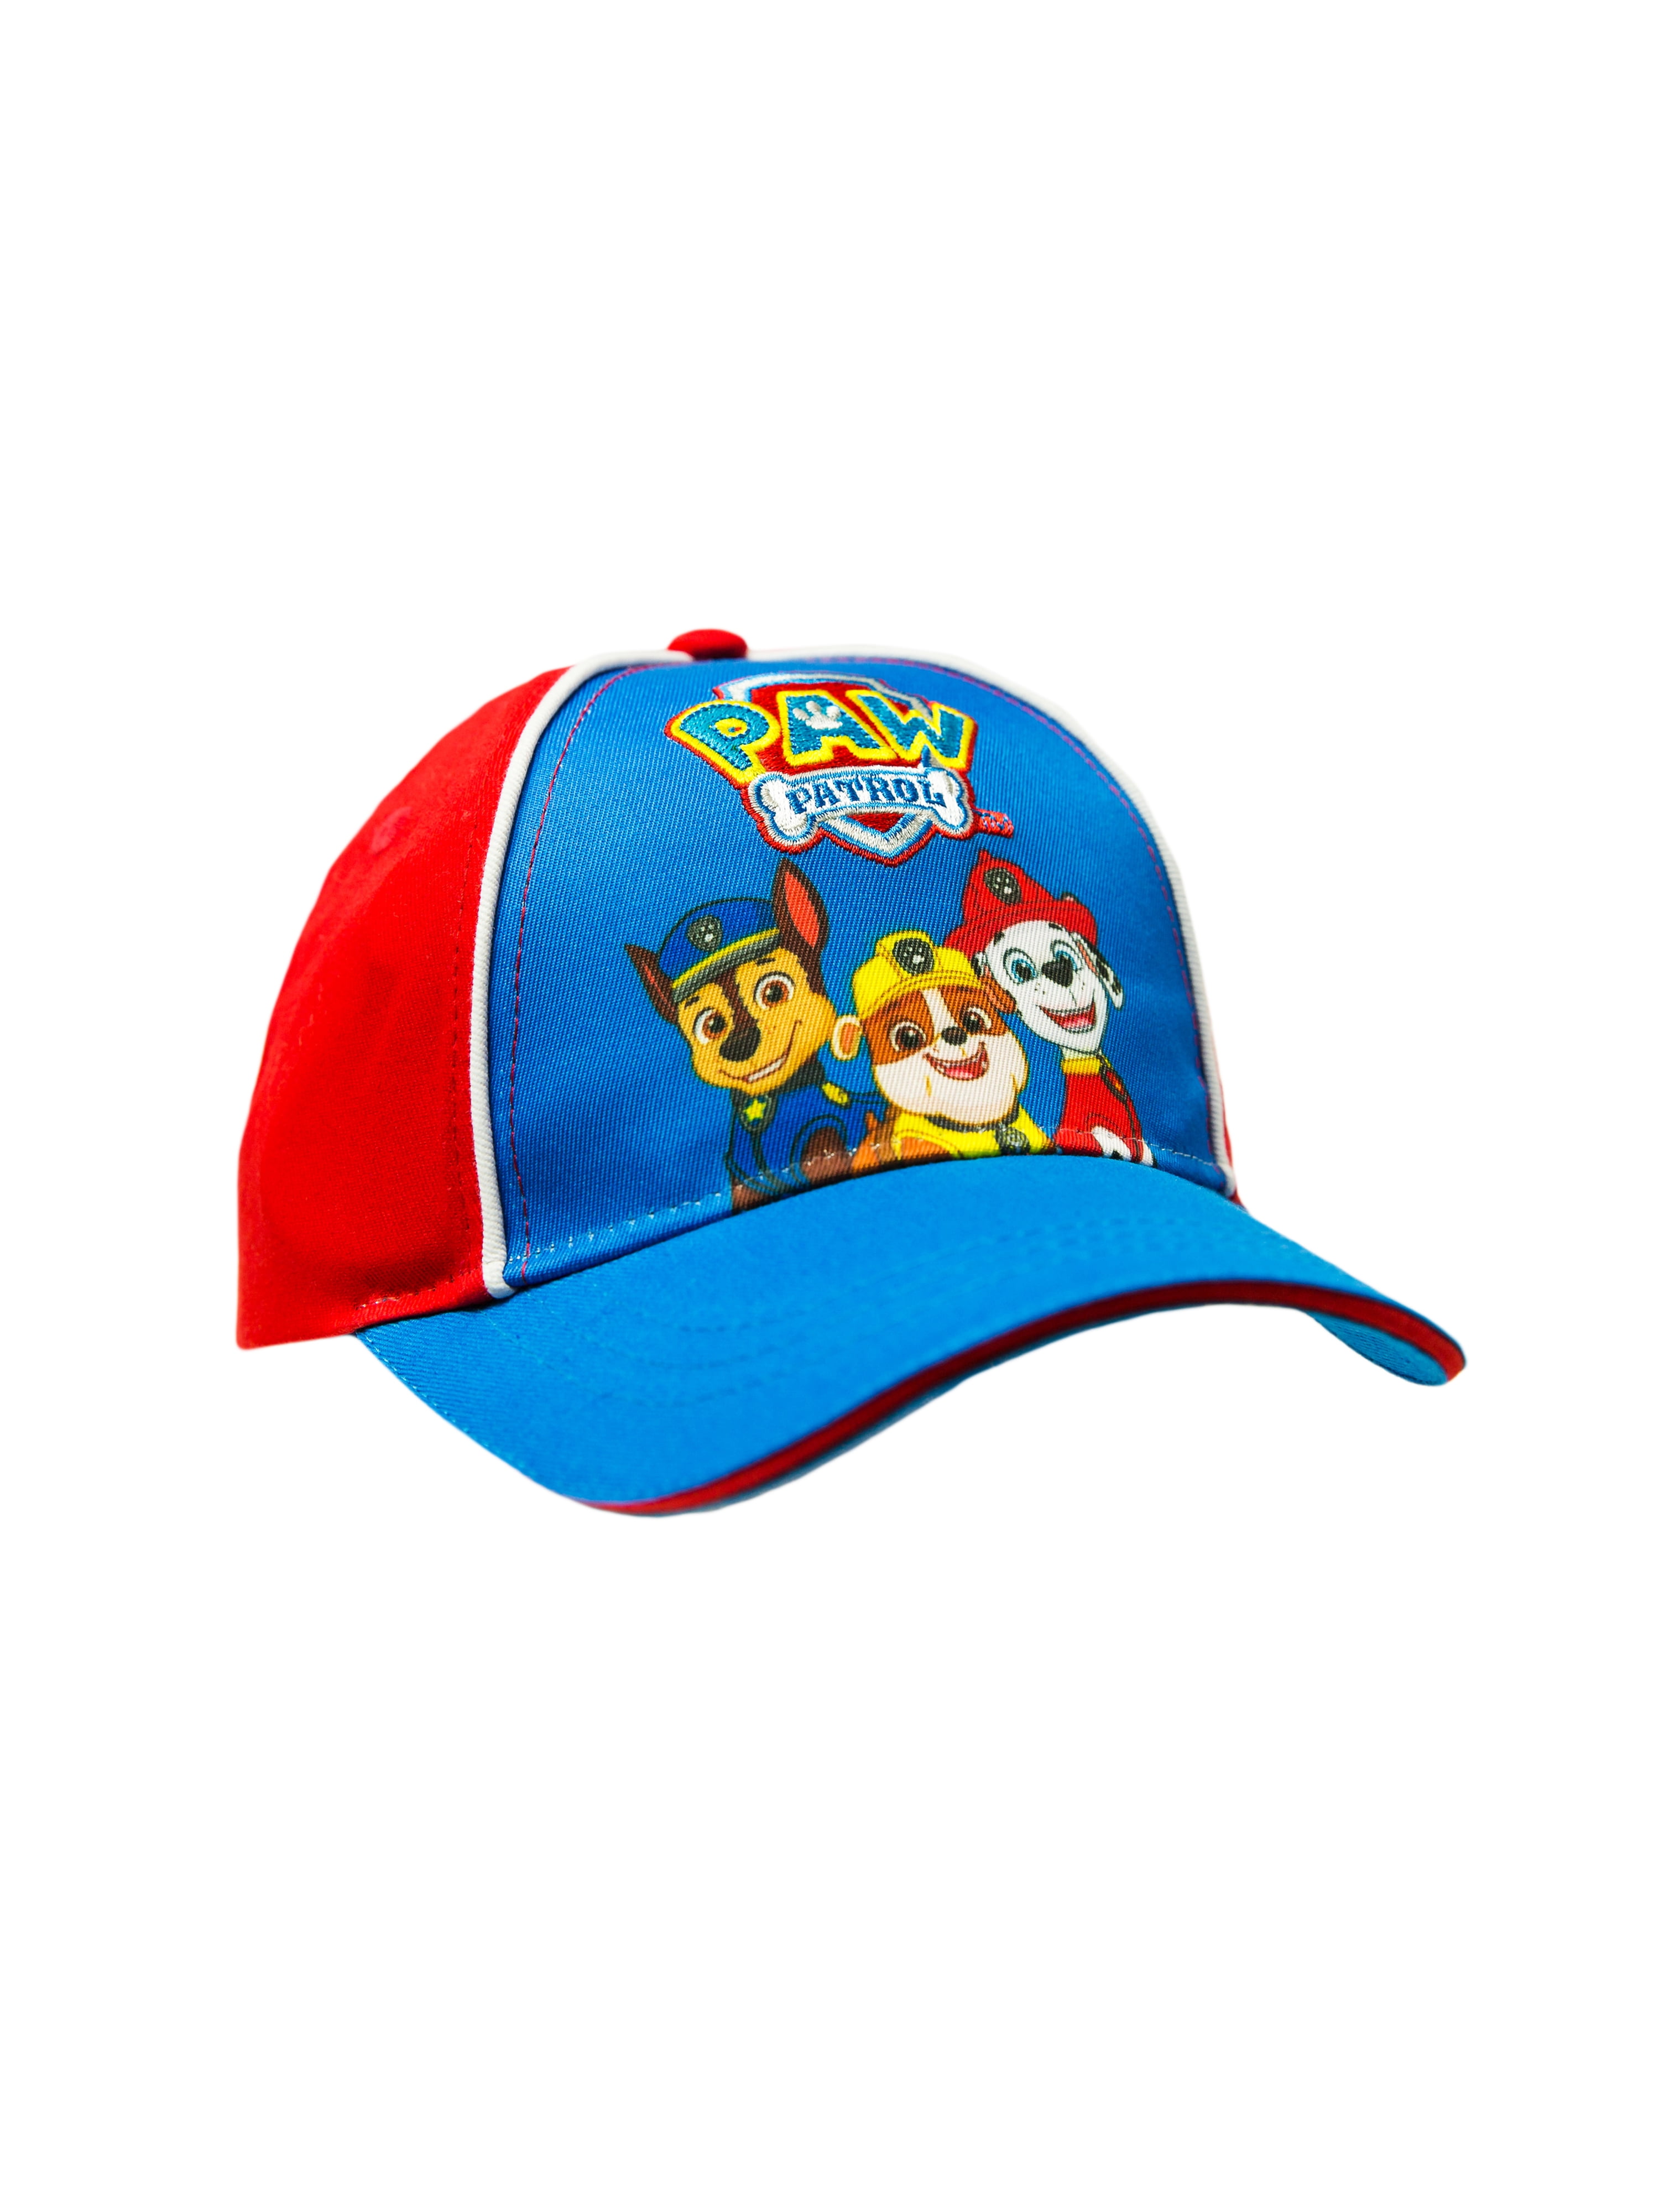 Kids PAW Patrol Baseball Cap Summer Hat Age 4-5 Years Blue